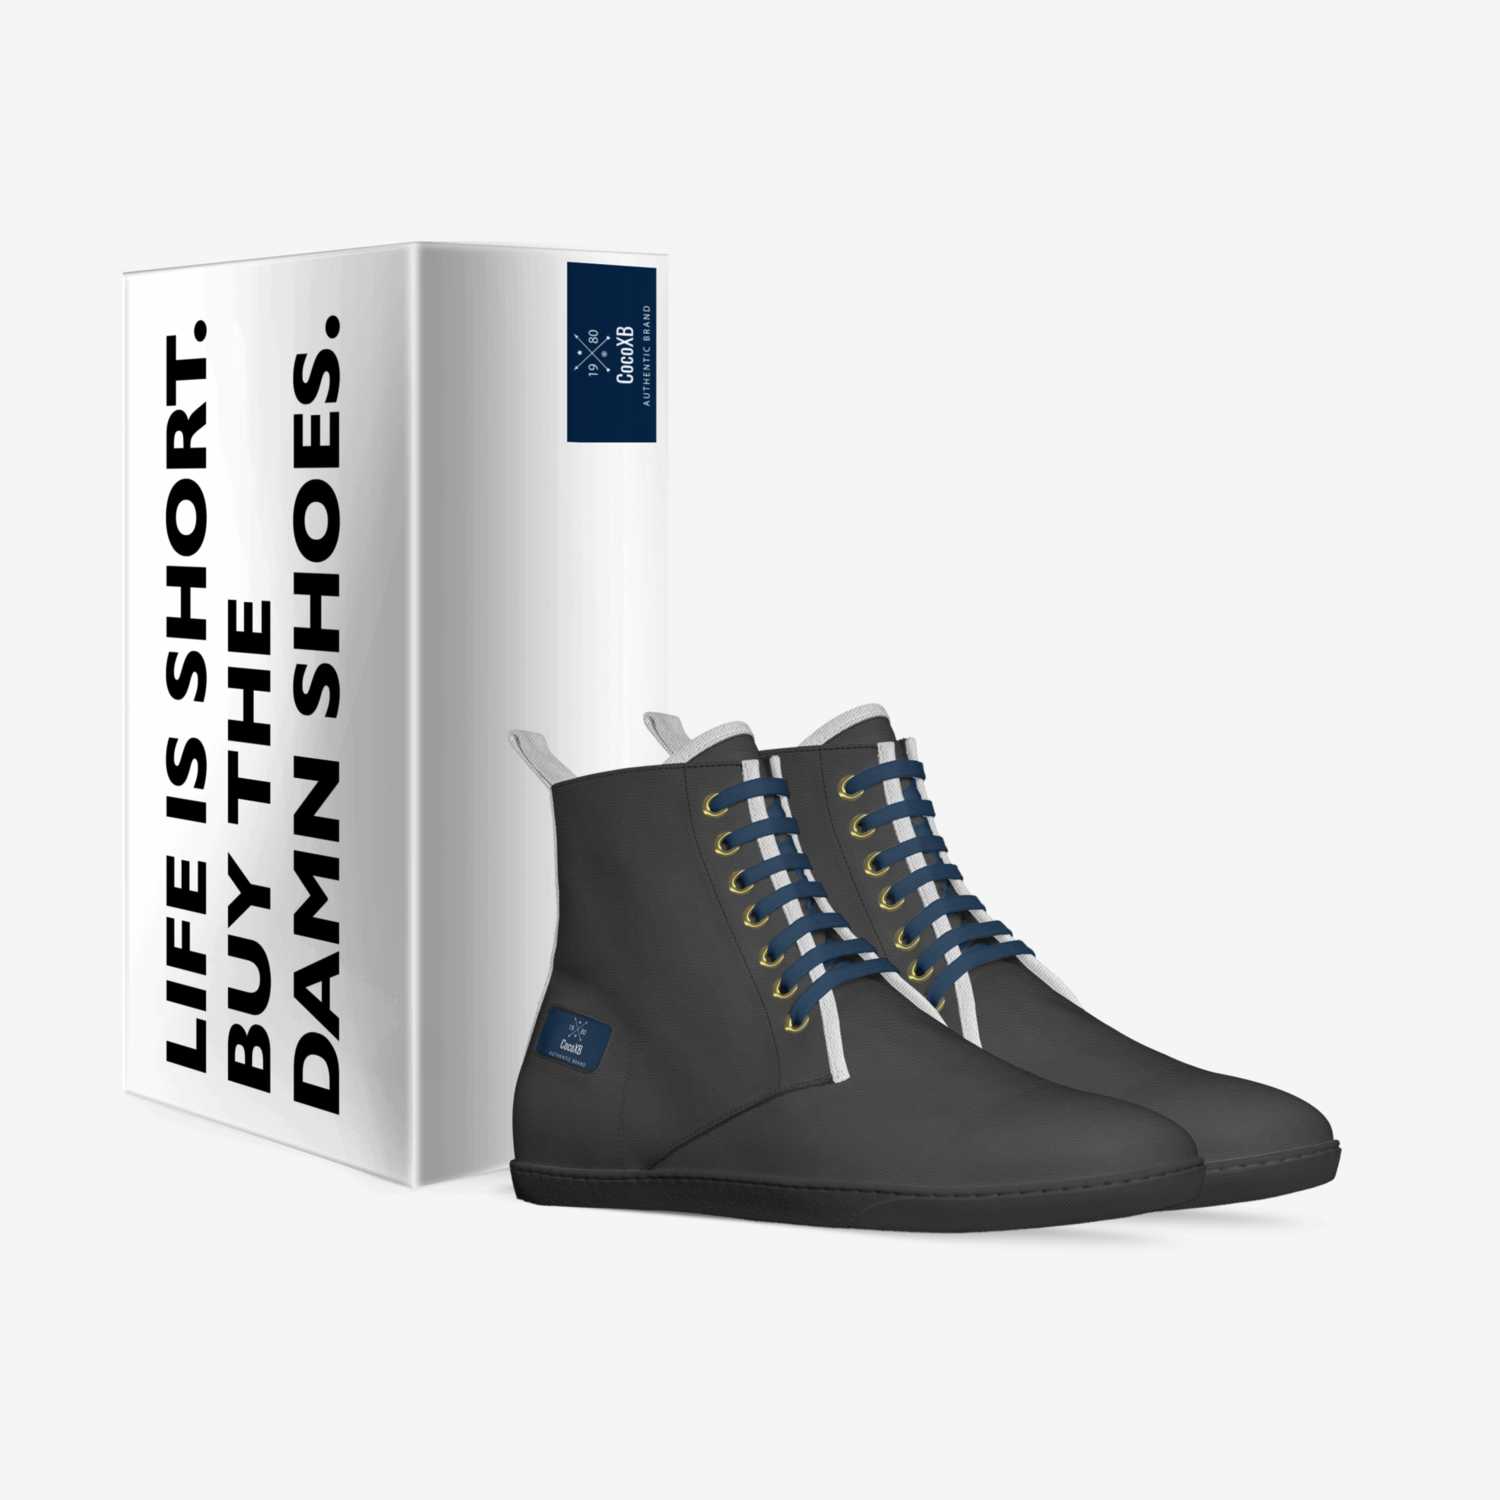 CocoXB custom made in Italy shoes by Cody Pitt | Box view